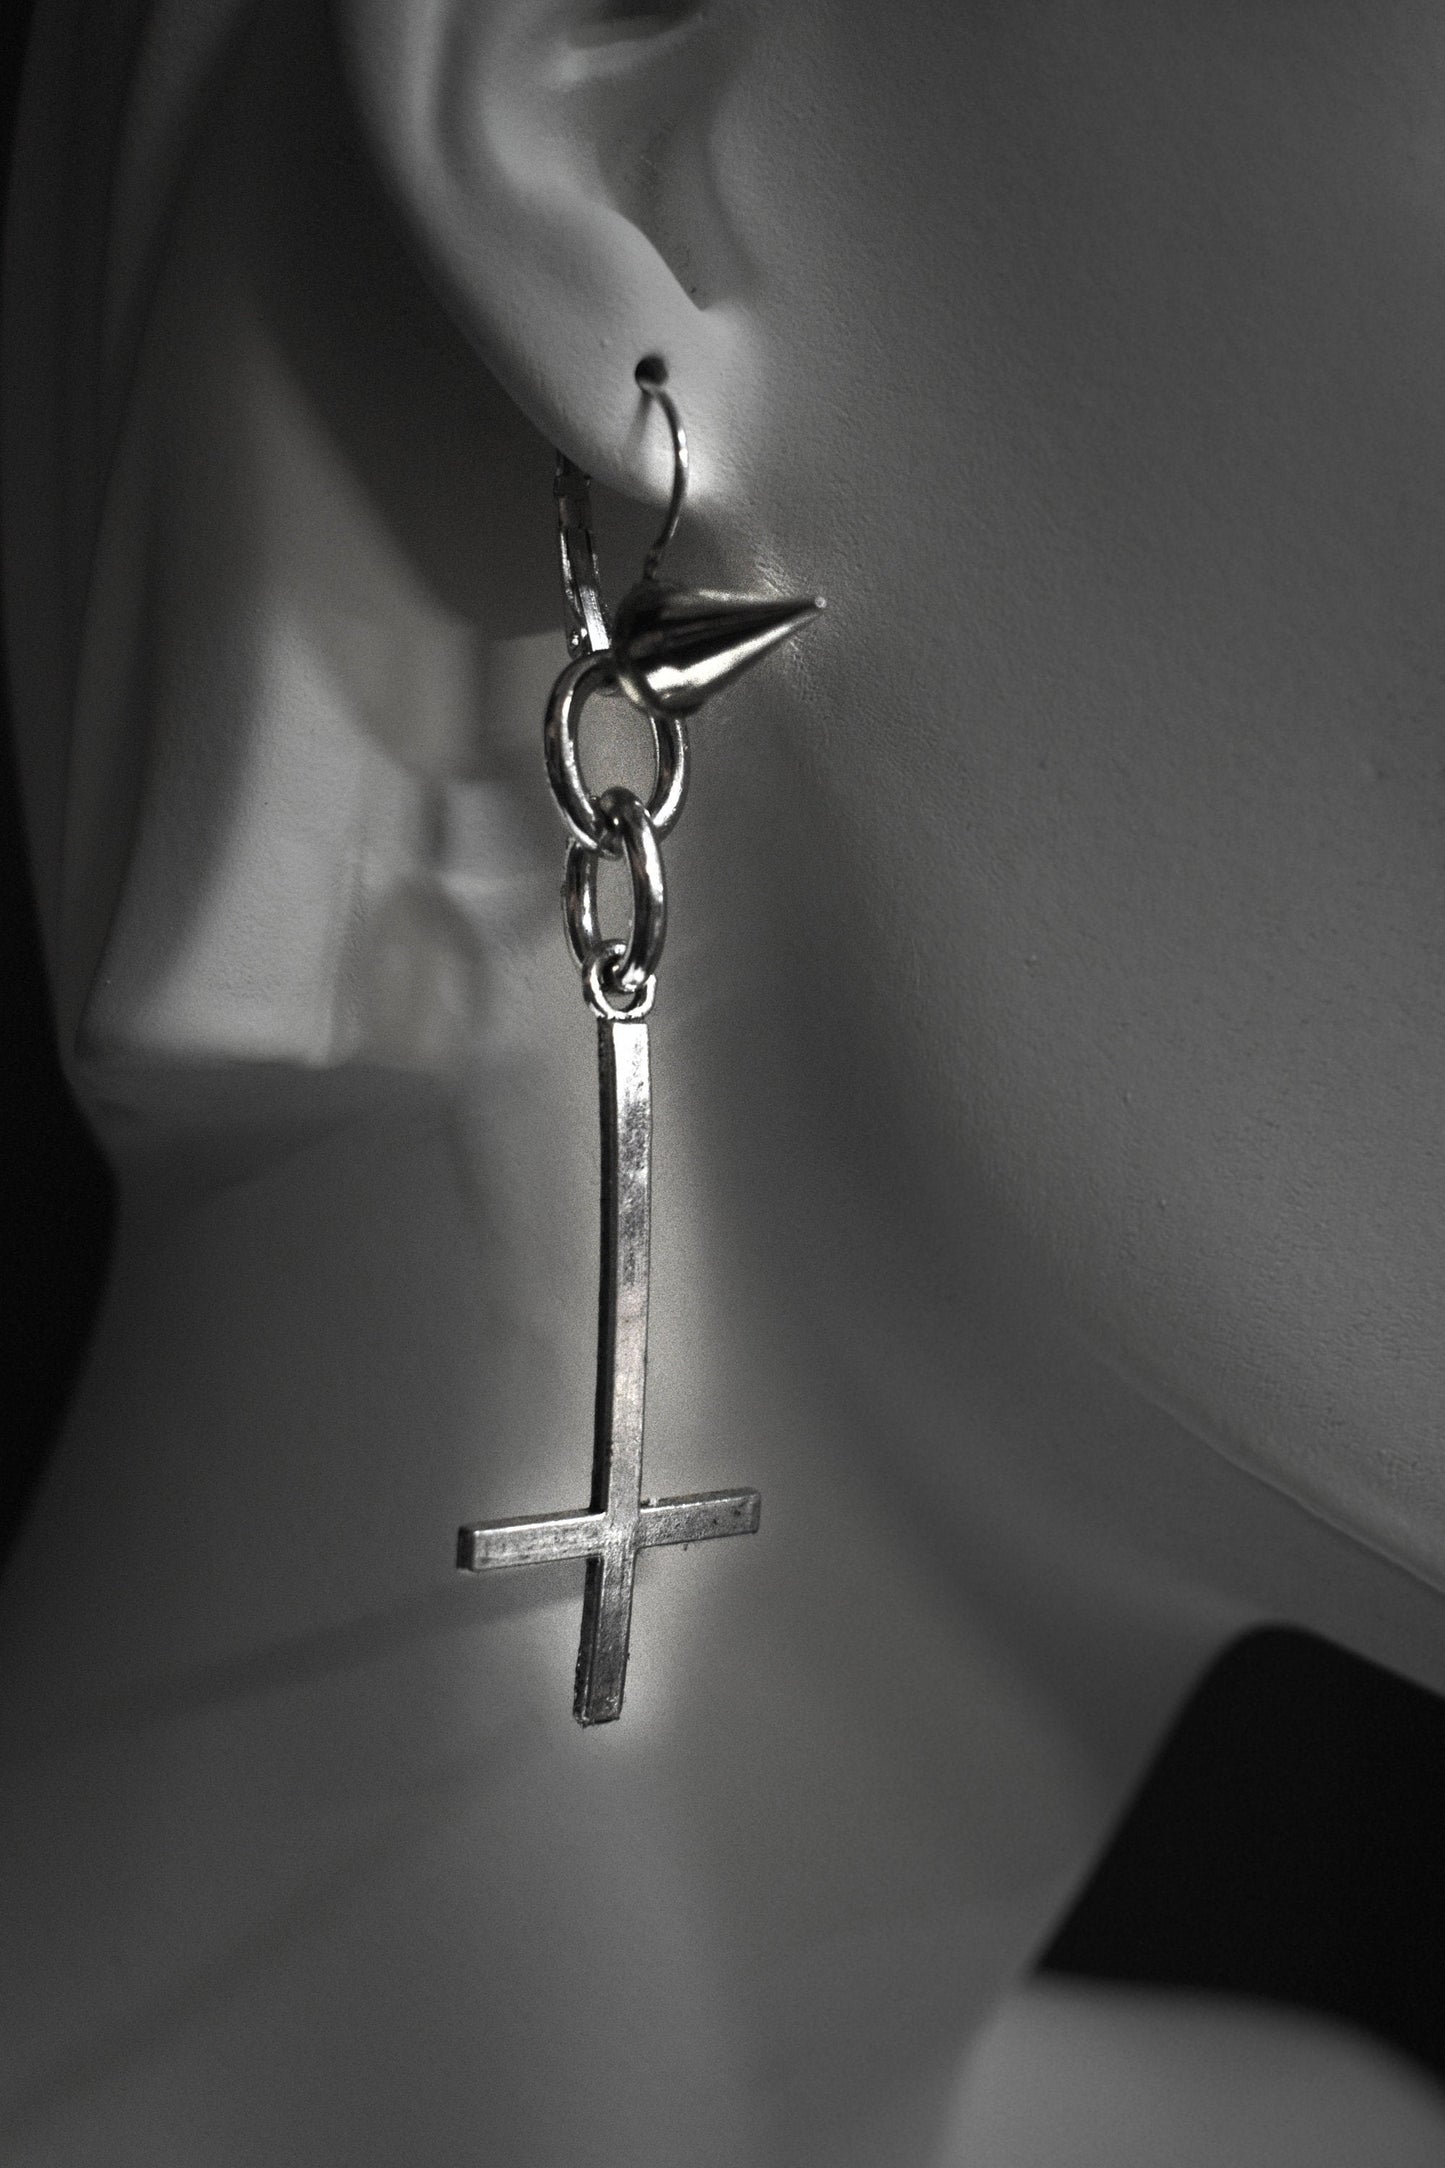 Spike stud Inverted Cross earring - Antichrist crucifix Satanic cross earrings